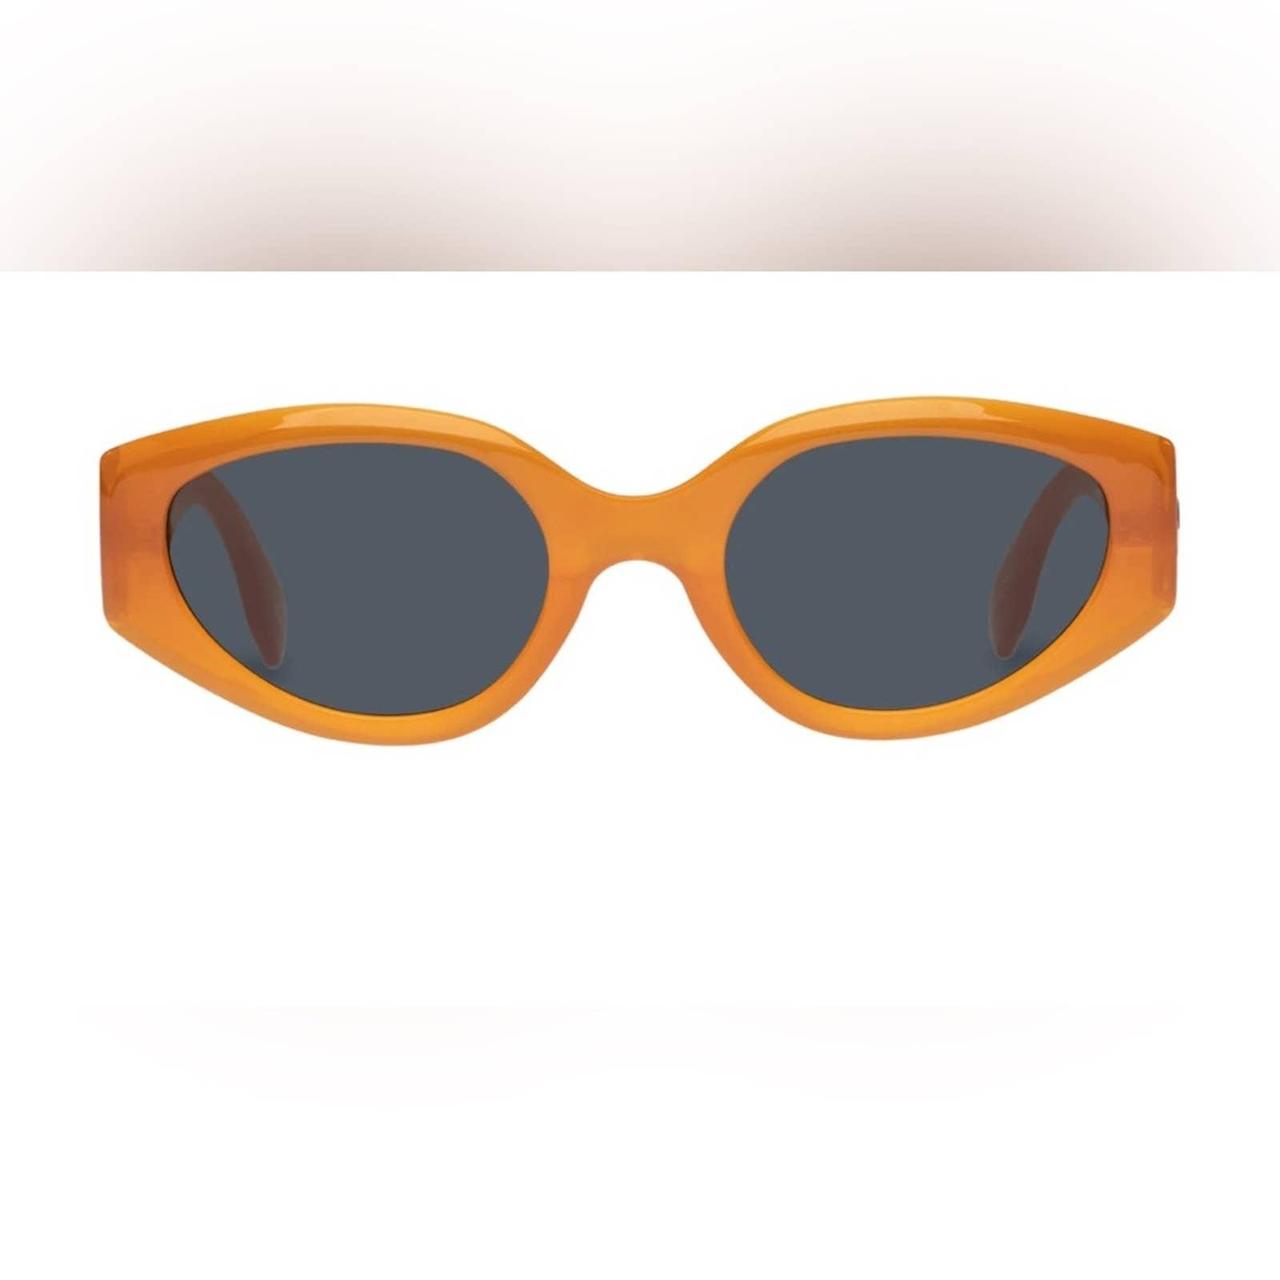 Le Specs Women's Orange Sunglasses | Depop